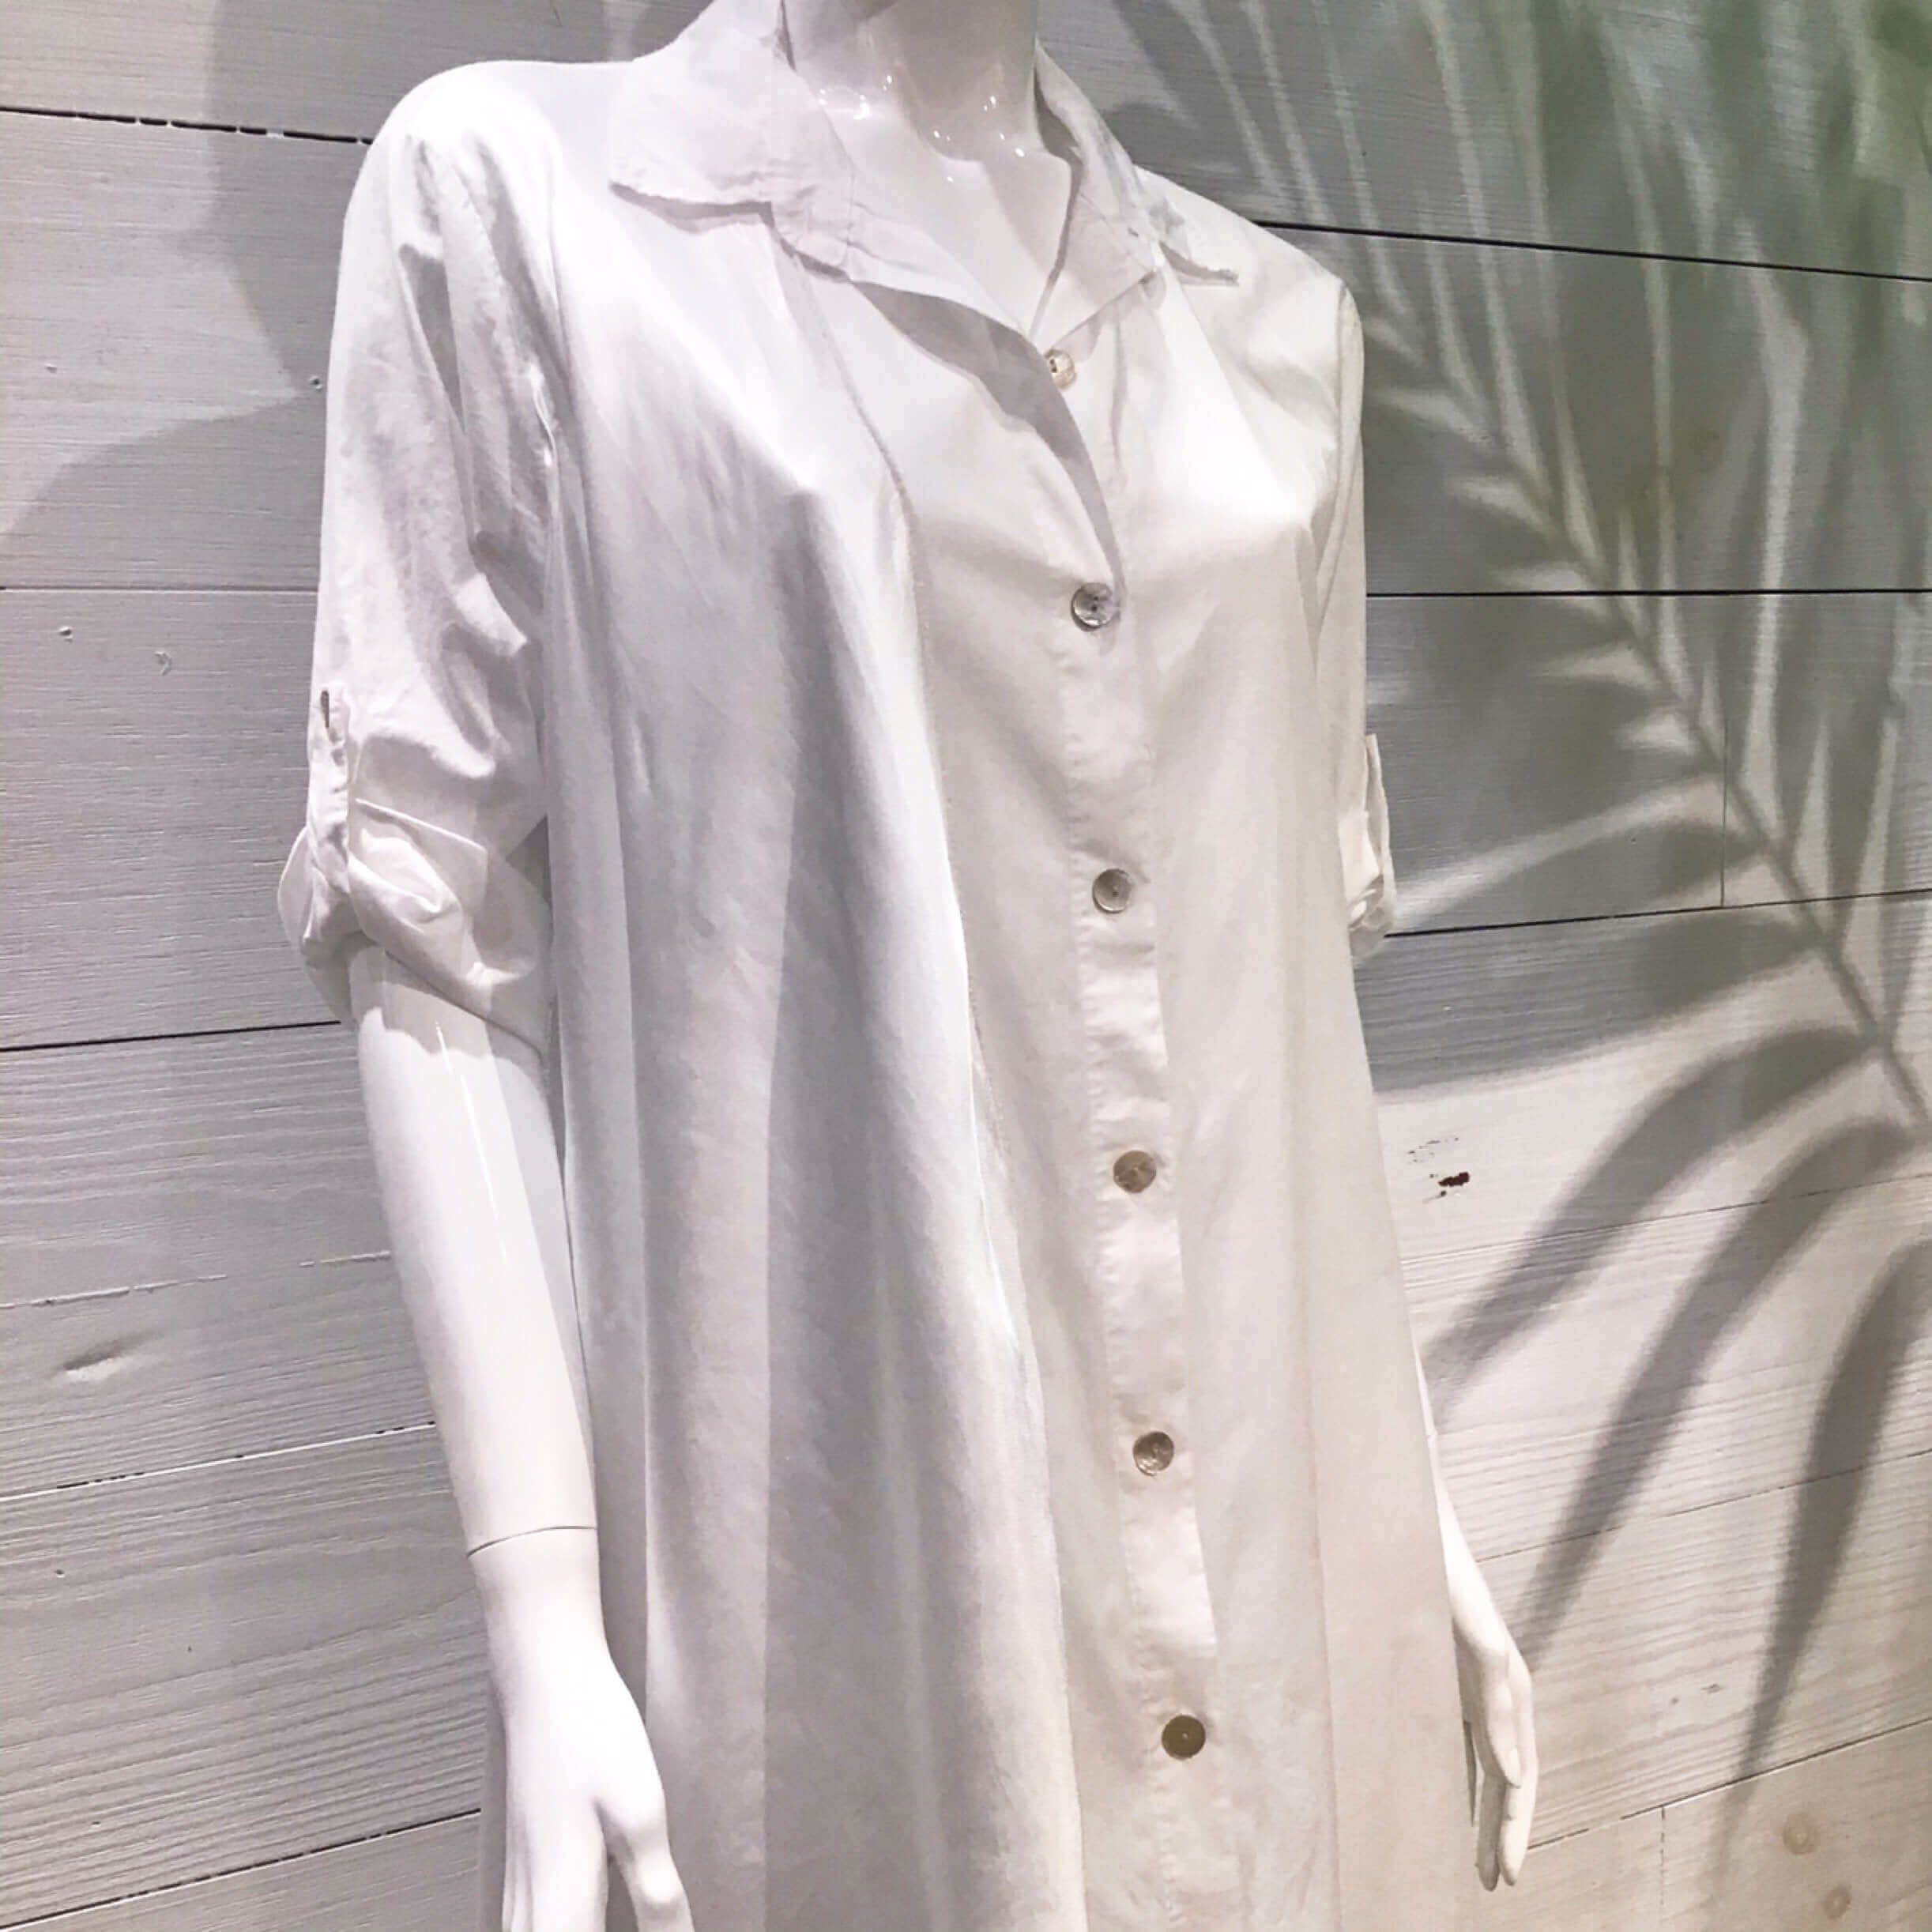 Silky Layer Cotton Shirt Italian Dress